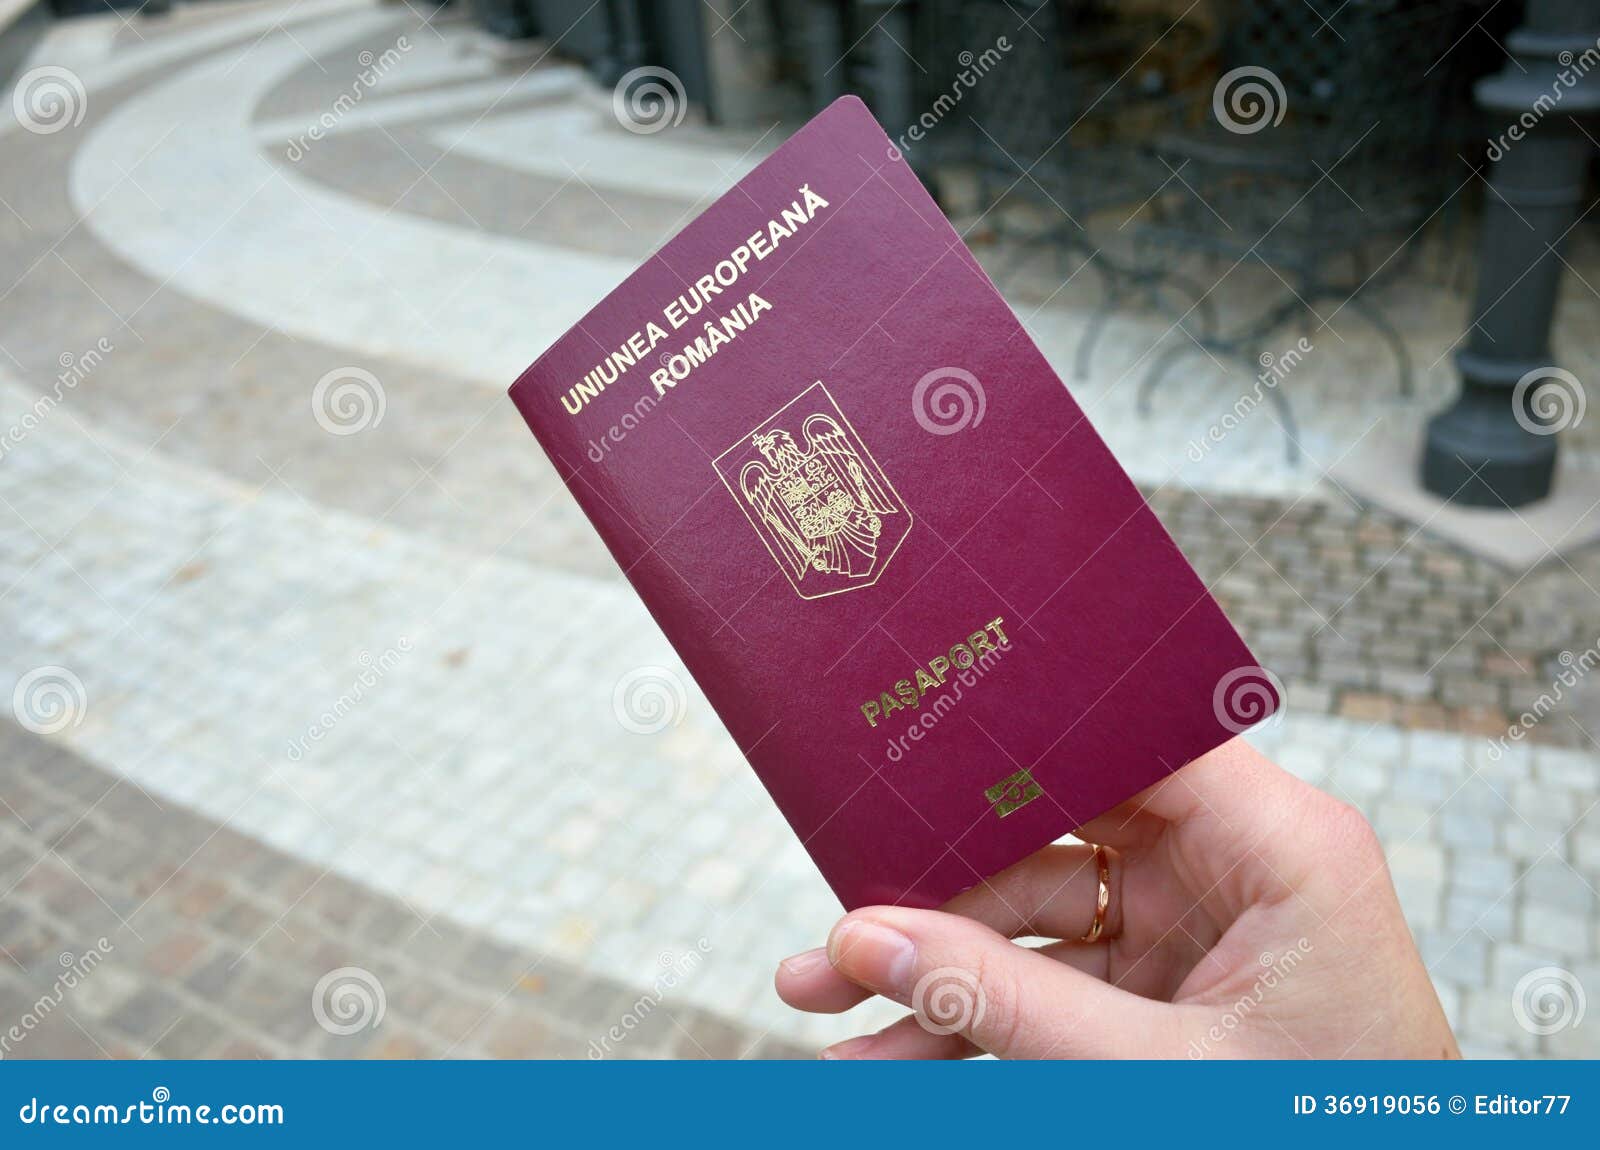 Romania passport